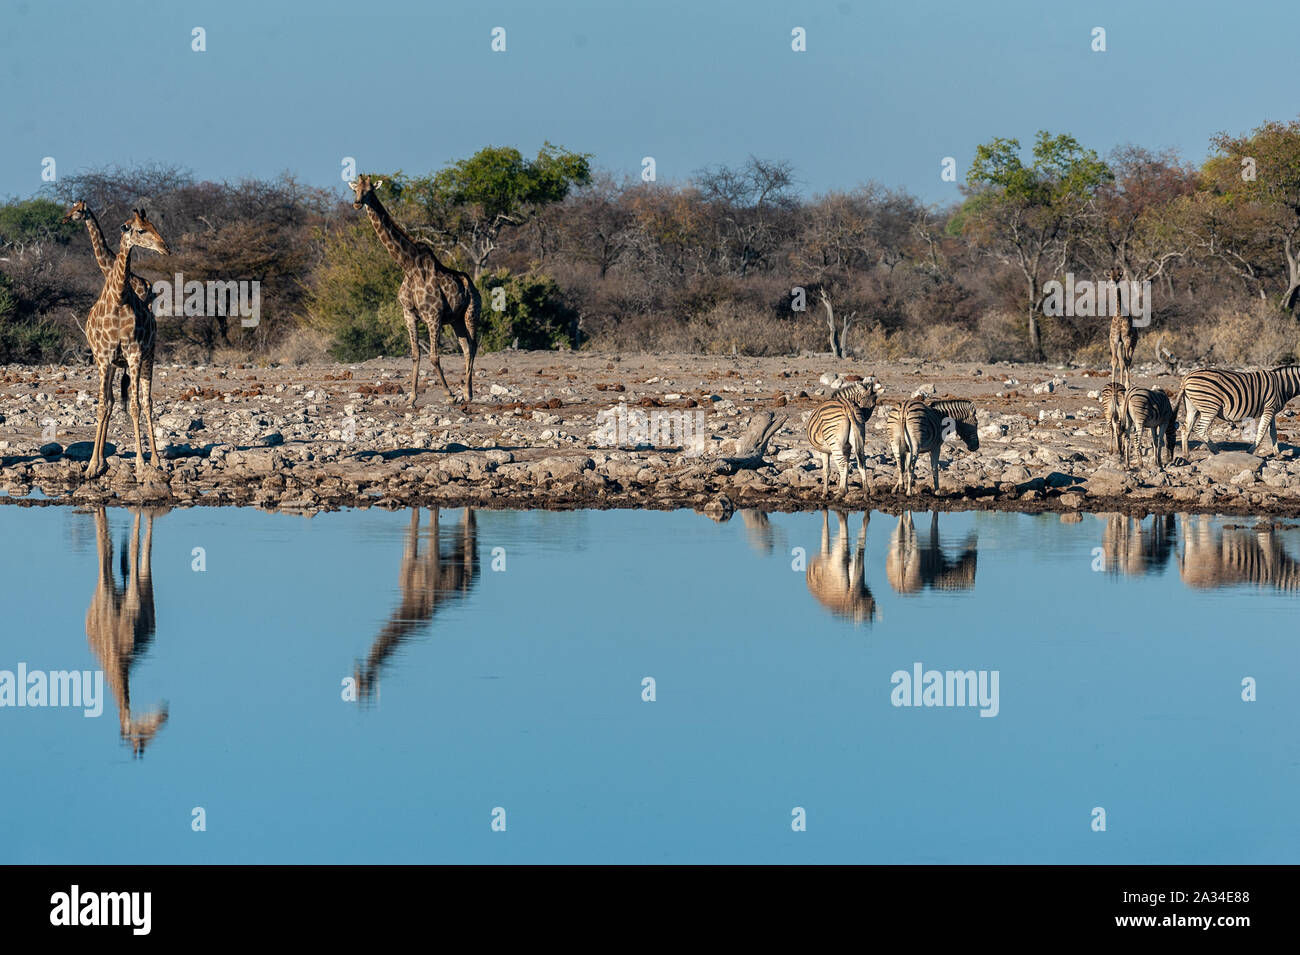 A group of Angolan Giraffe - Giraffa giraffa angolensis- and Burchells zebra -Equus quagga- burchellii- drinking from a waterhole, while being reflected in the surface of the water. Etosha National Park, Namibia. Stock Photo